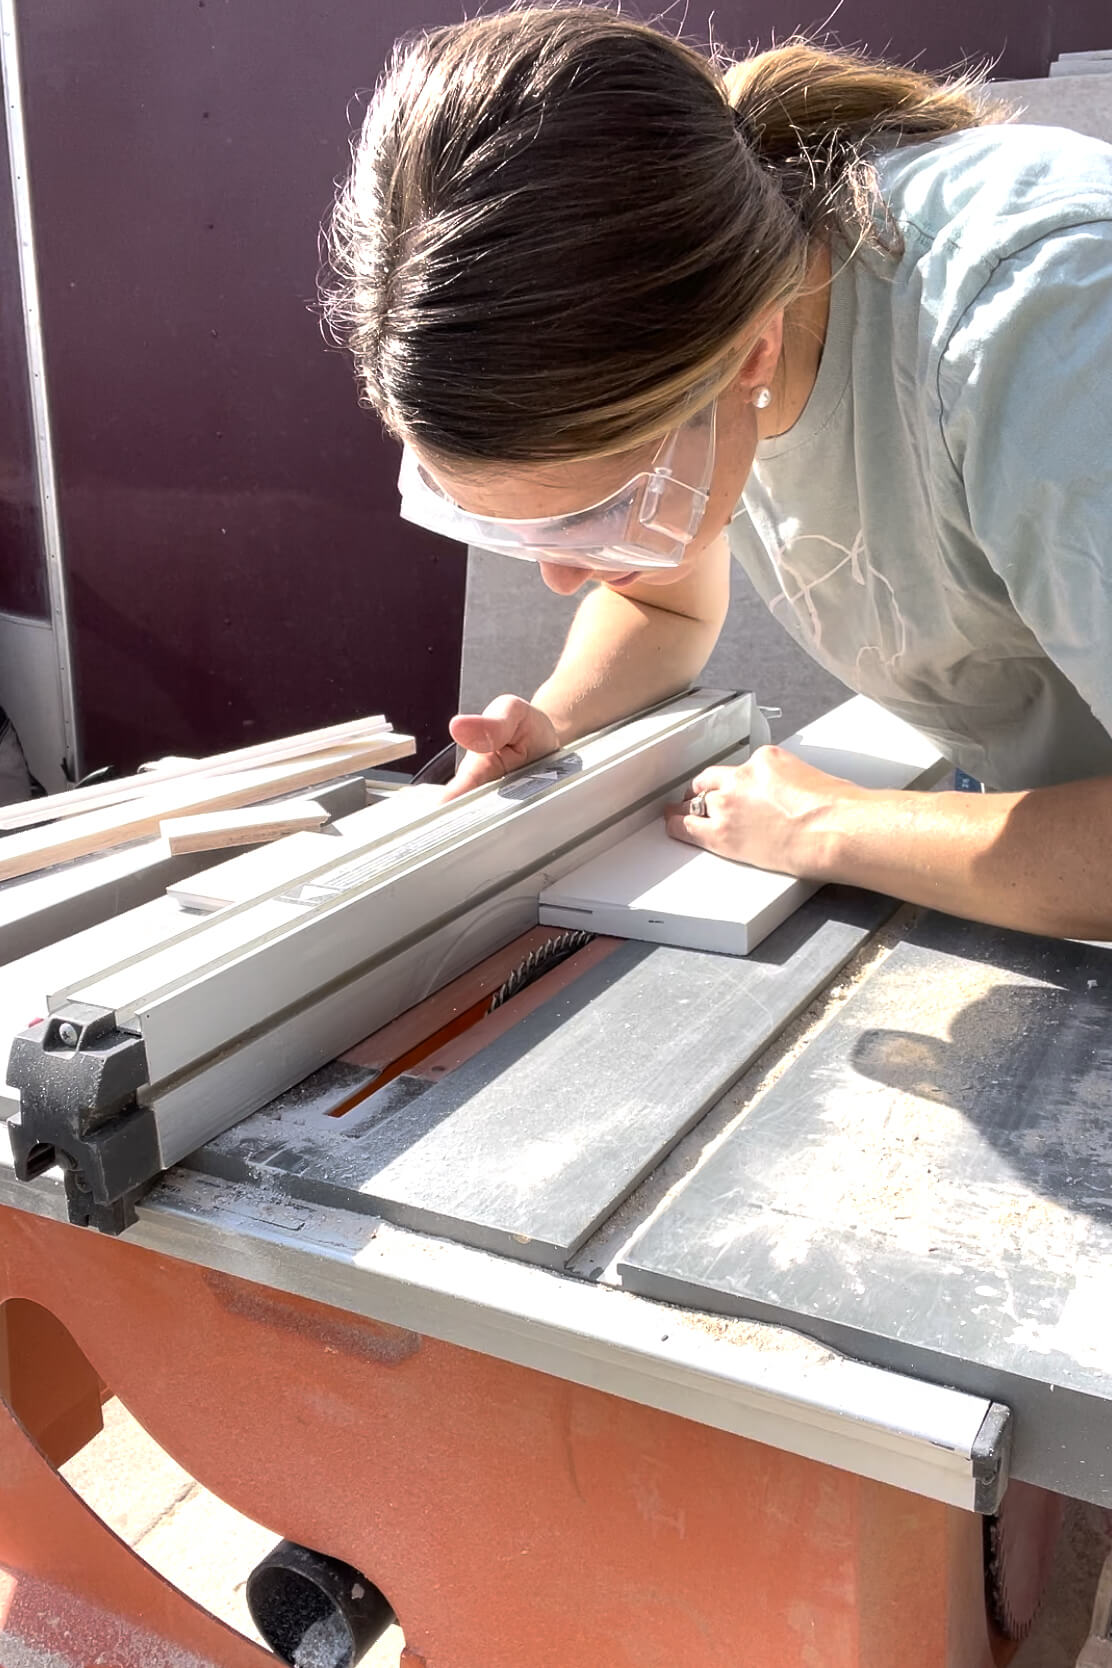 Using a table saw to cut PVC trim.